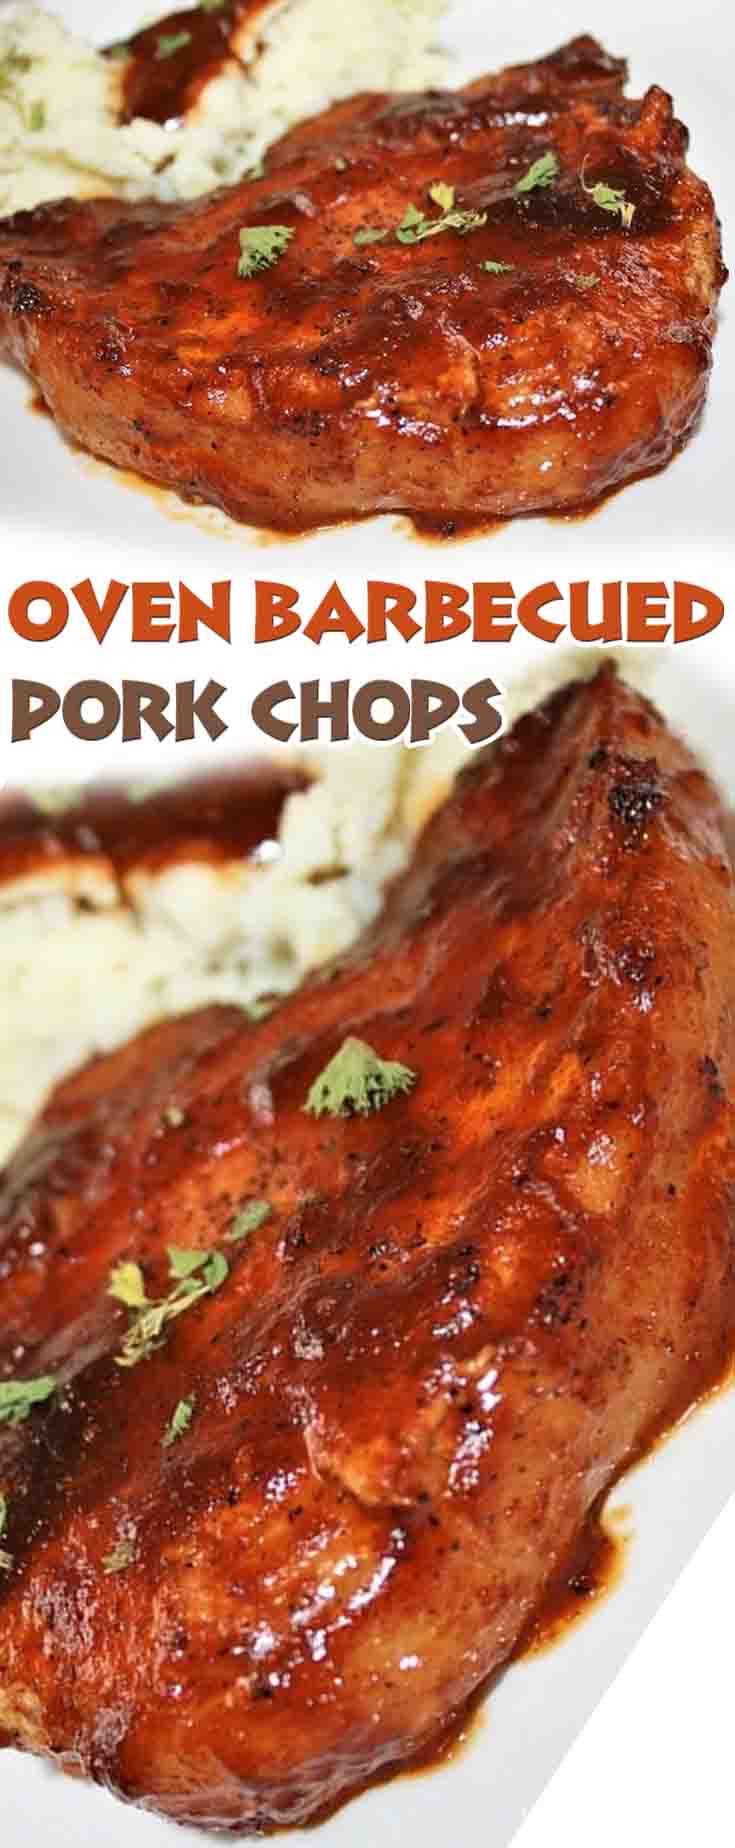 frozen bbq pork chops in oven